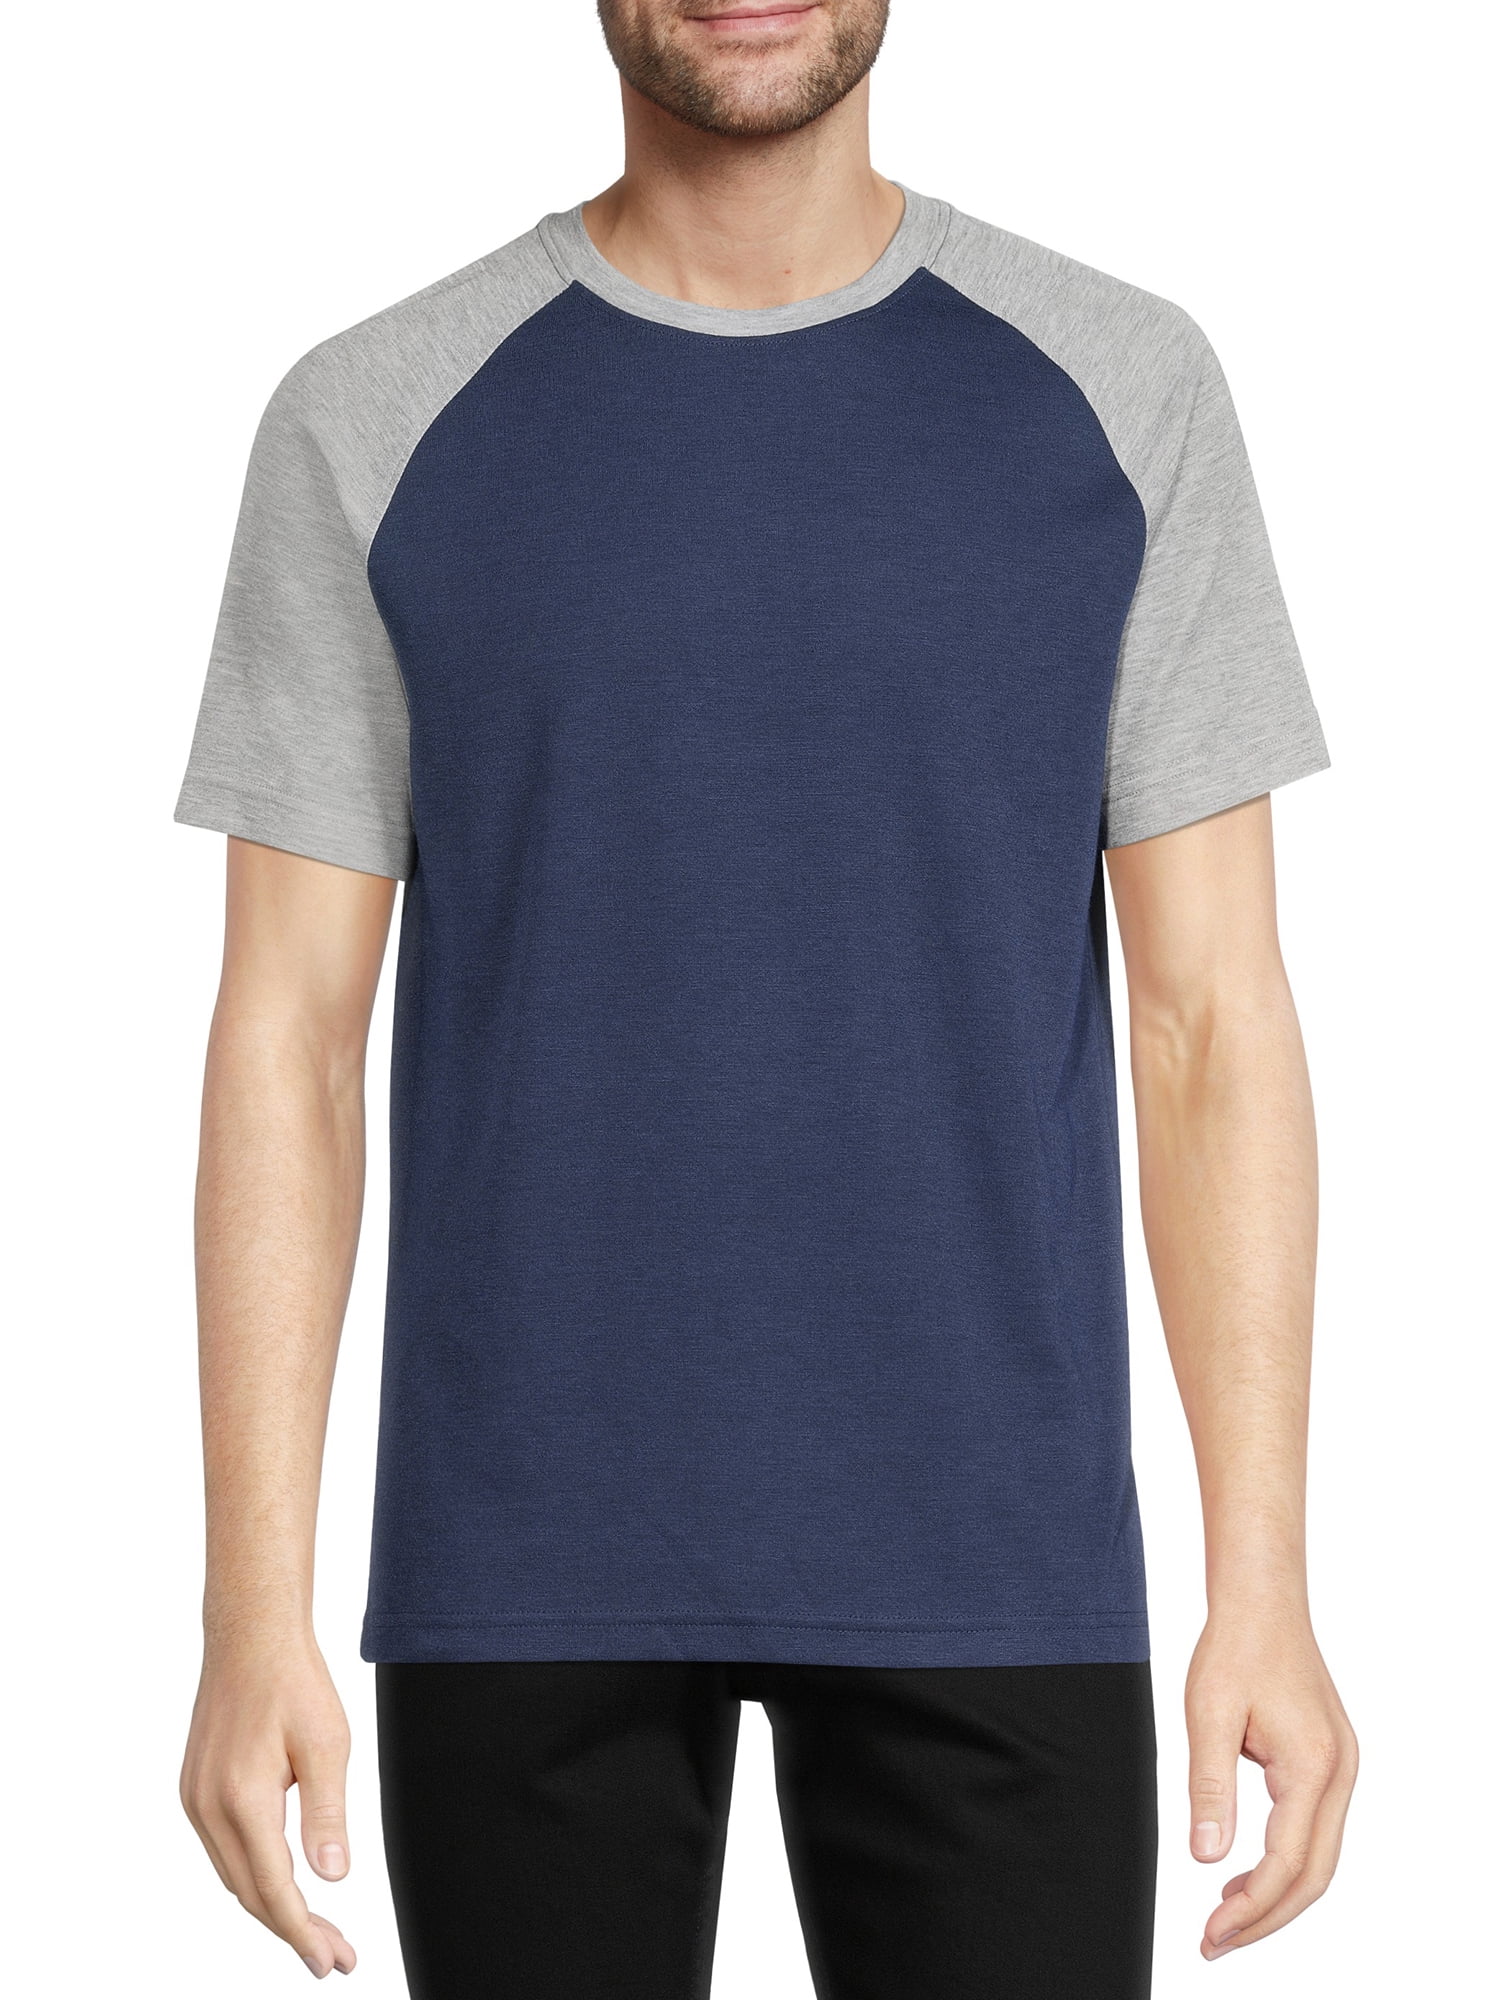 George Men's Raglan T-Shirt - Walmart.com